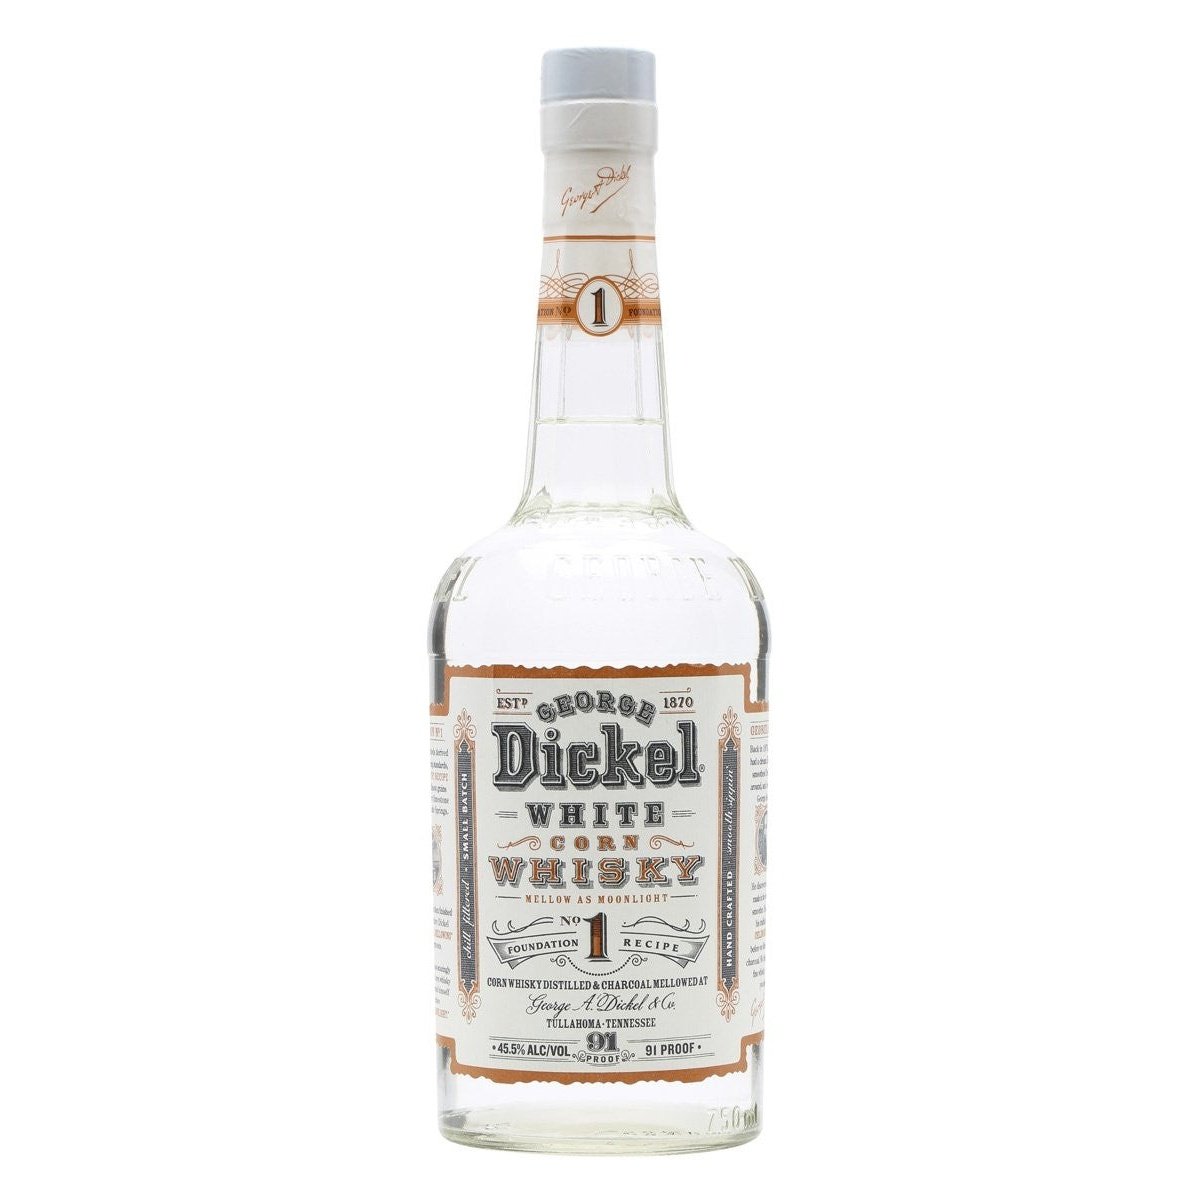 George Dickel White Corn No.1 Whisky 750ml